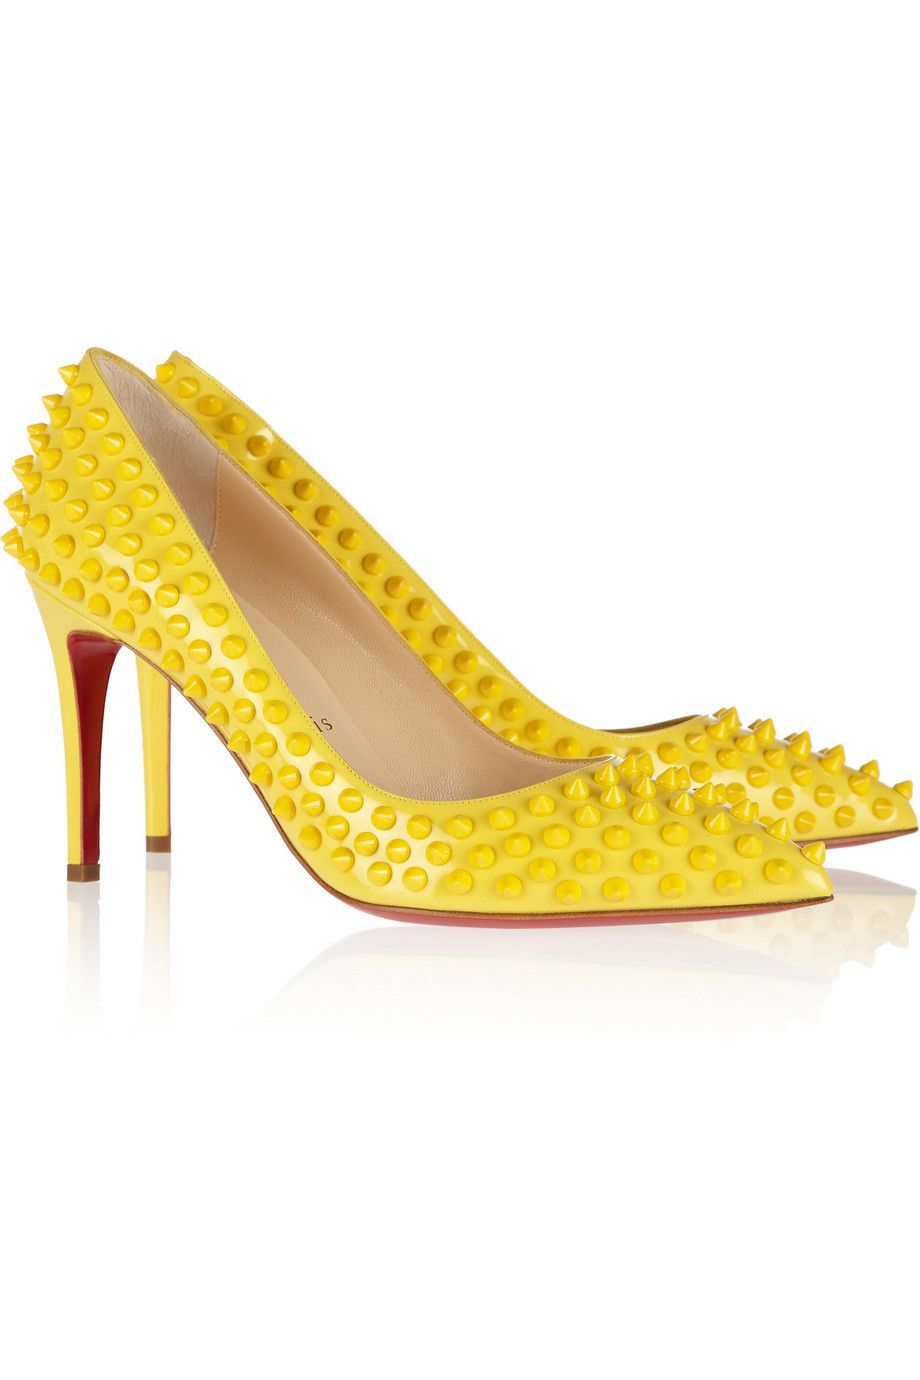 Yellow, High heels, Fashion, Tan, Sandal, Beige, Basic pump, Foot, Bridal shoe, Fashion design, 